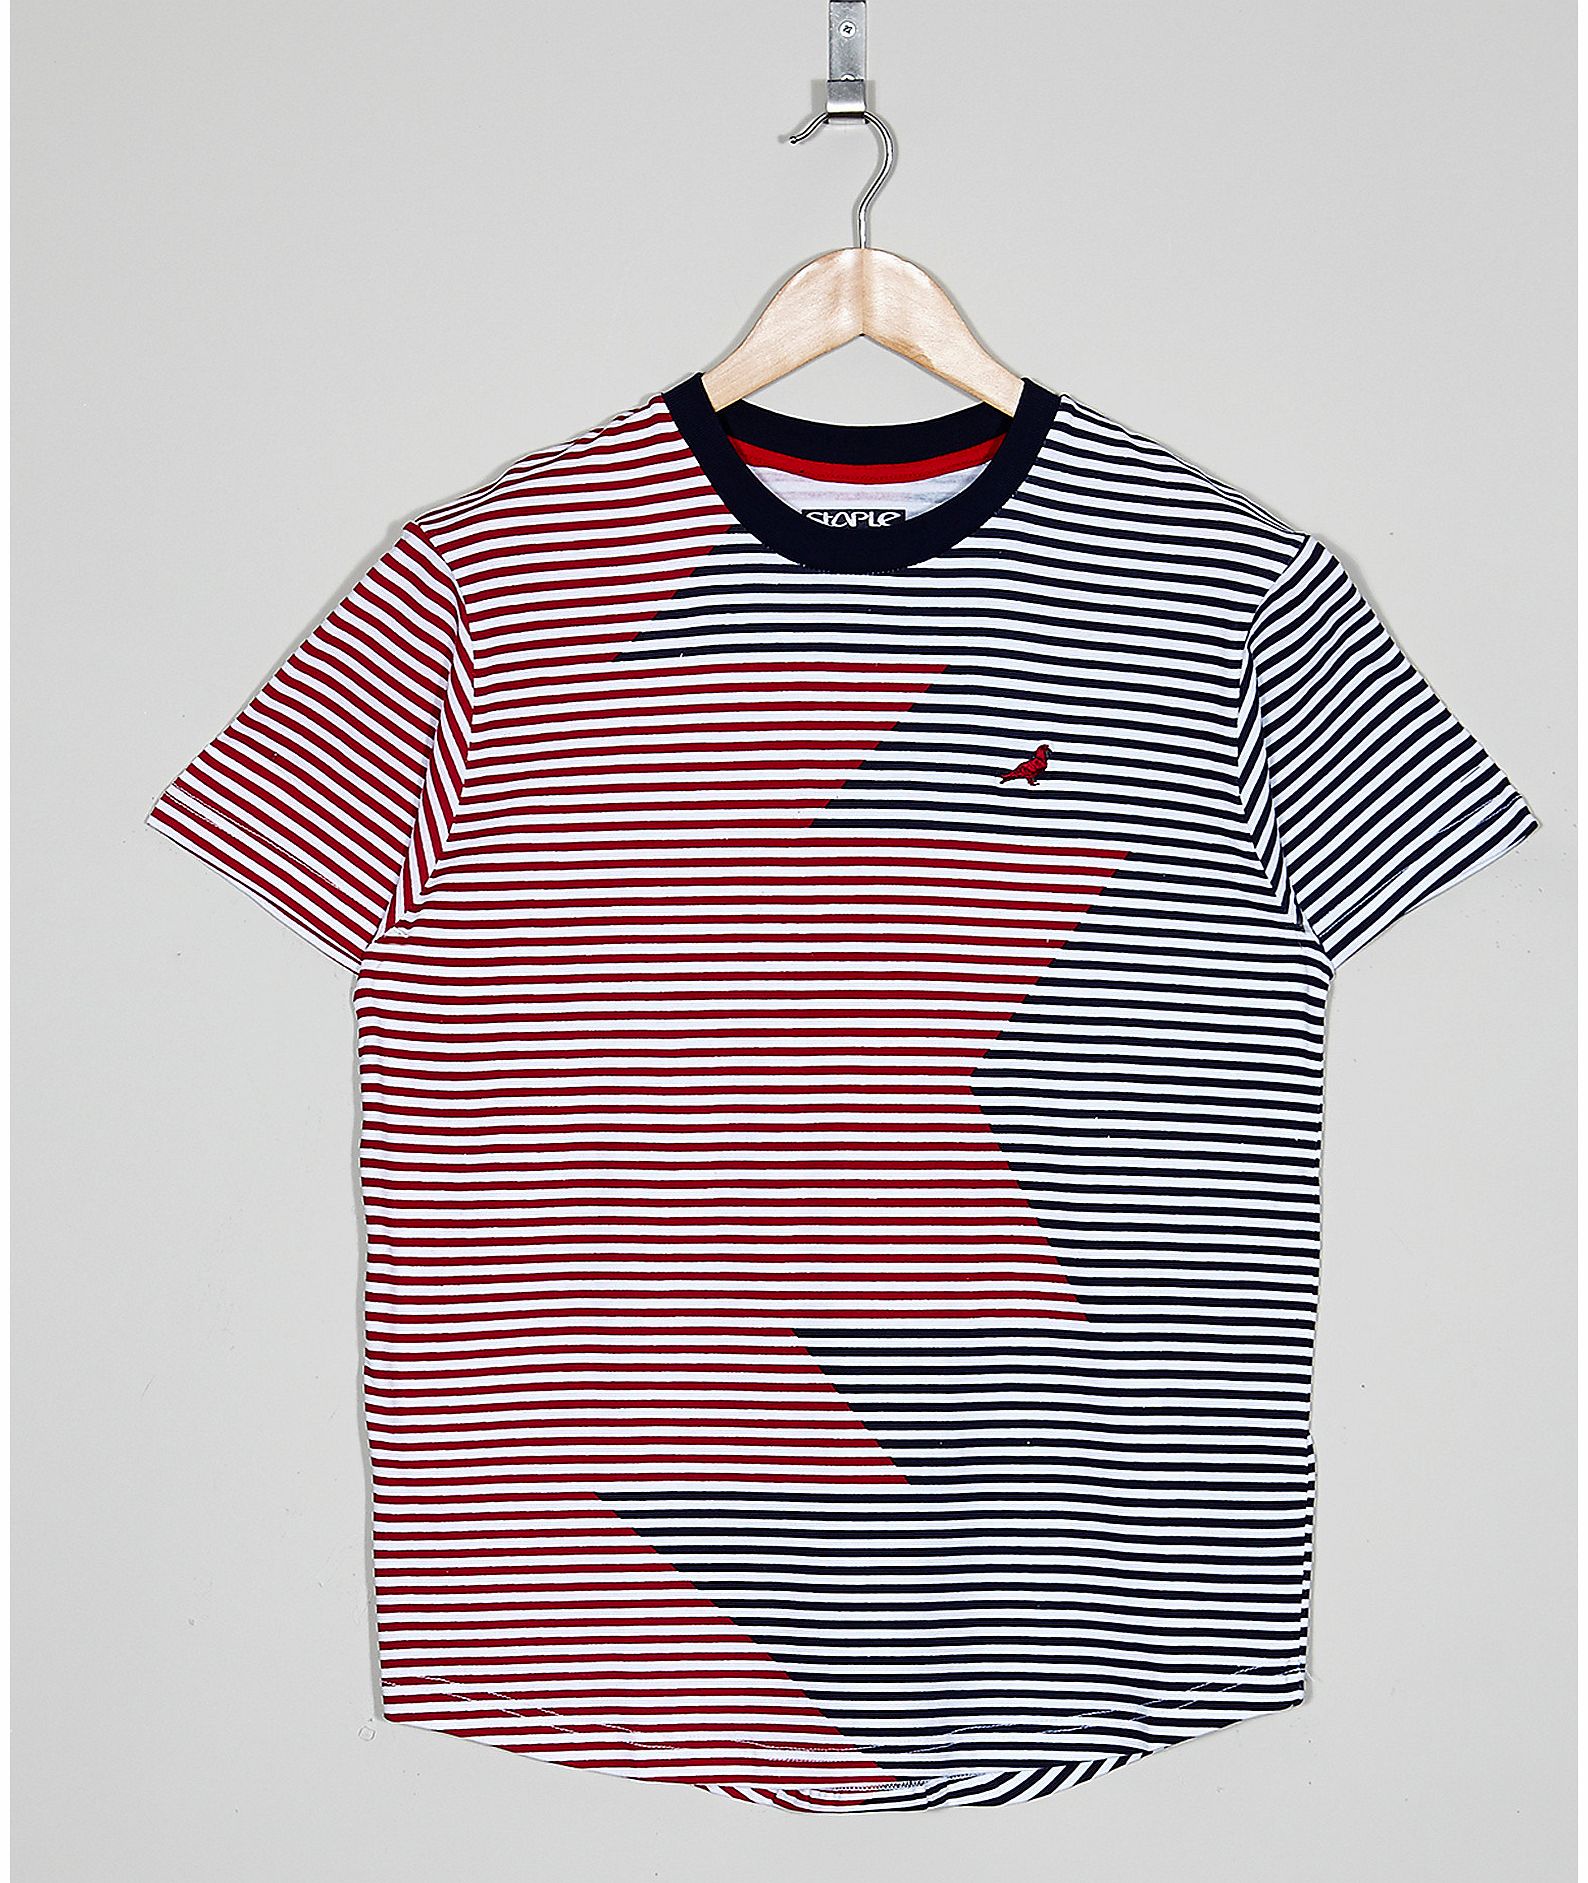 Staple Design Reyes Striped T-Shirt